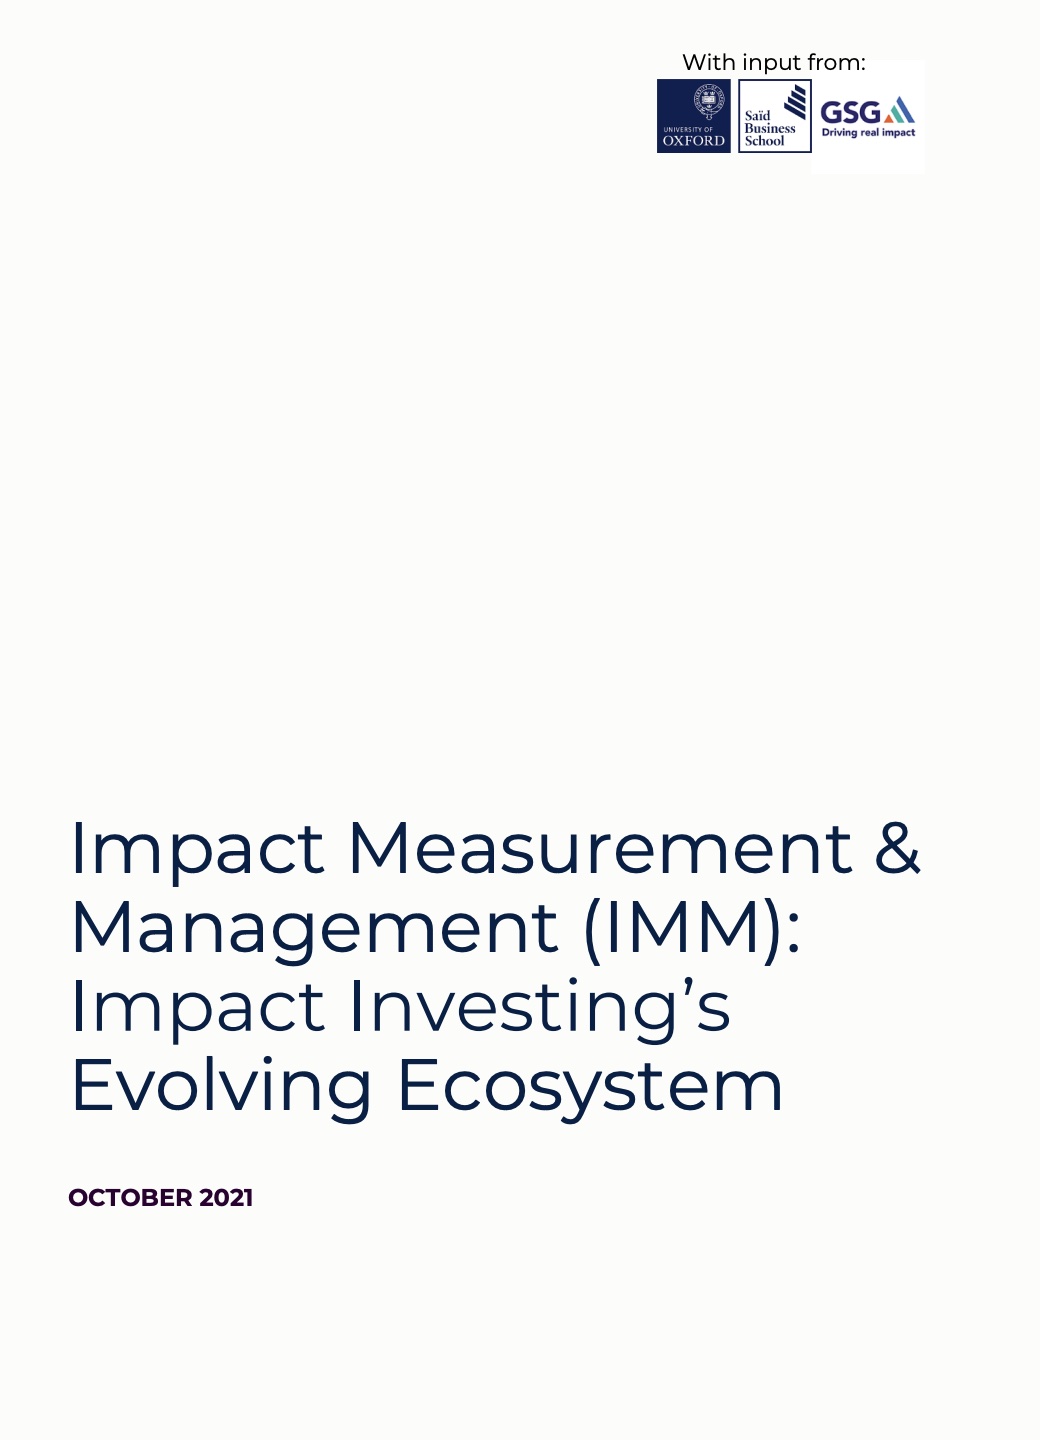 Impact Measurement & Management (IMM) Impact Investing's Evolving Ecosystem